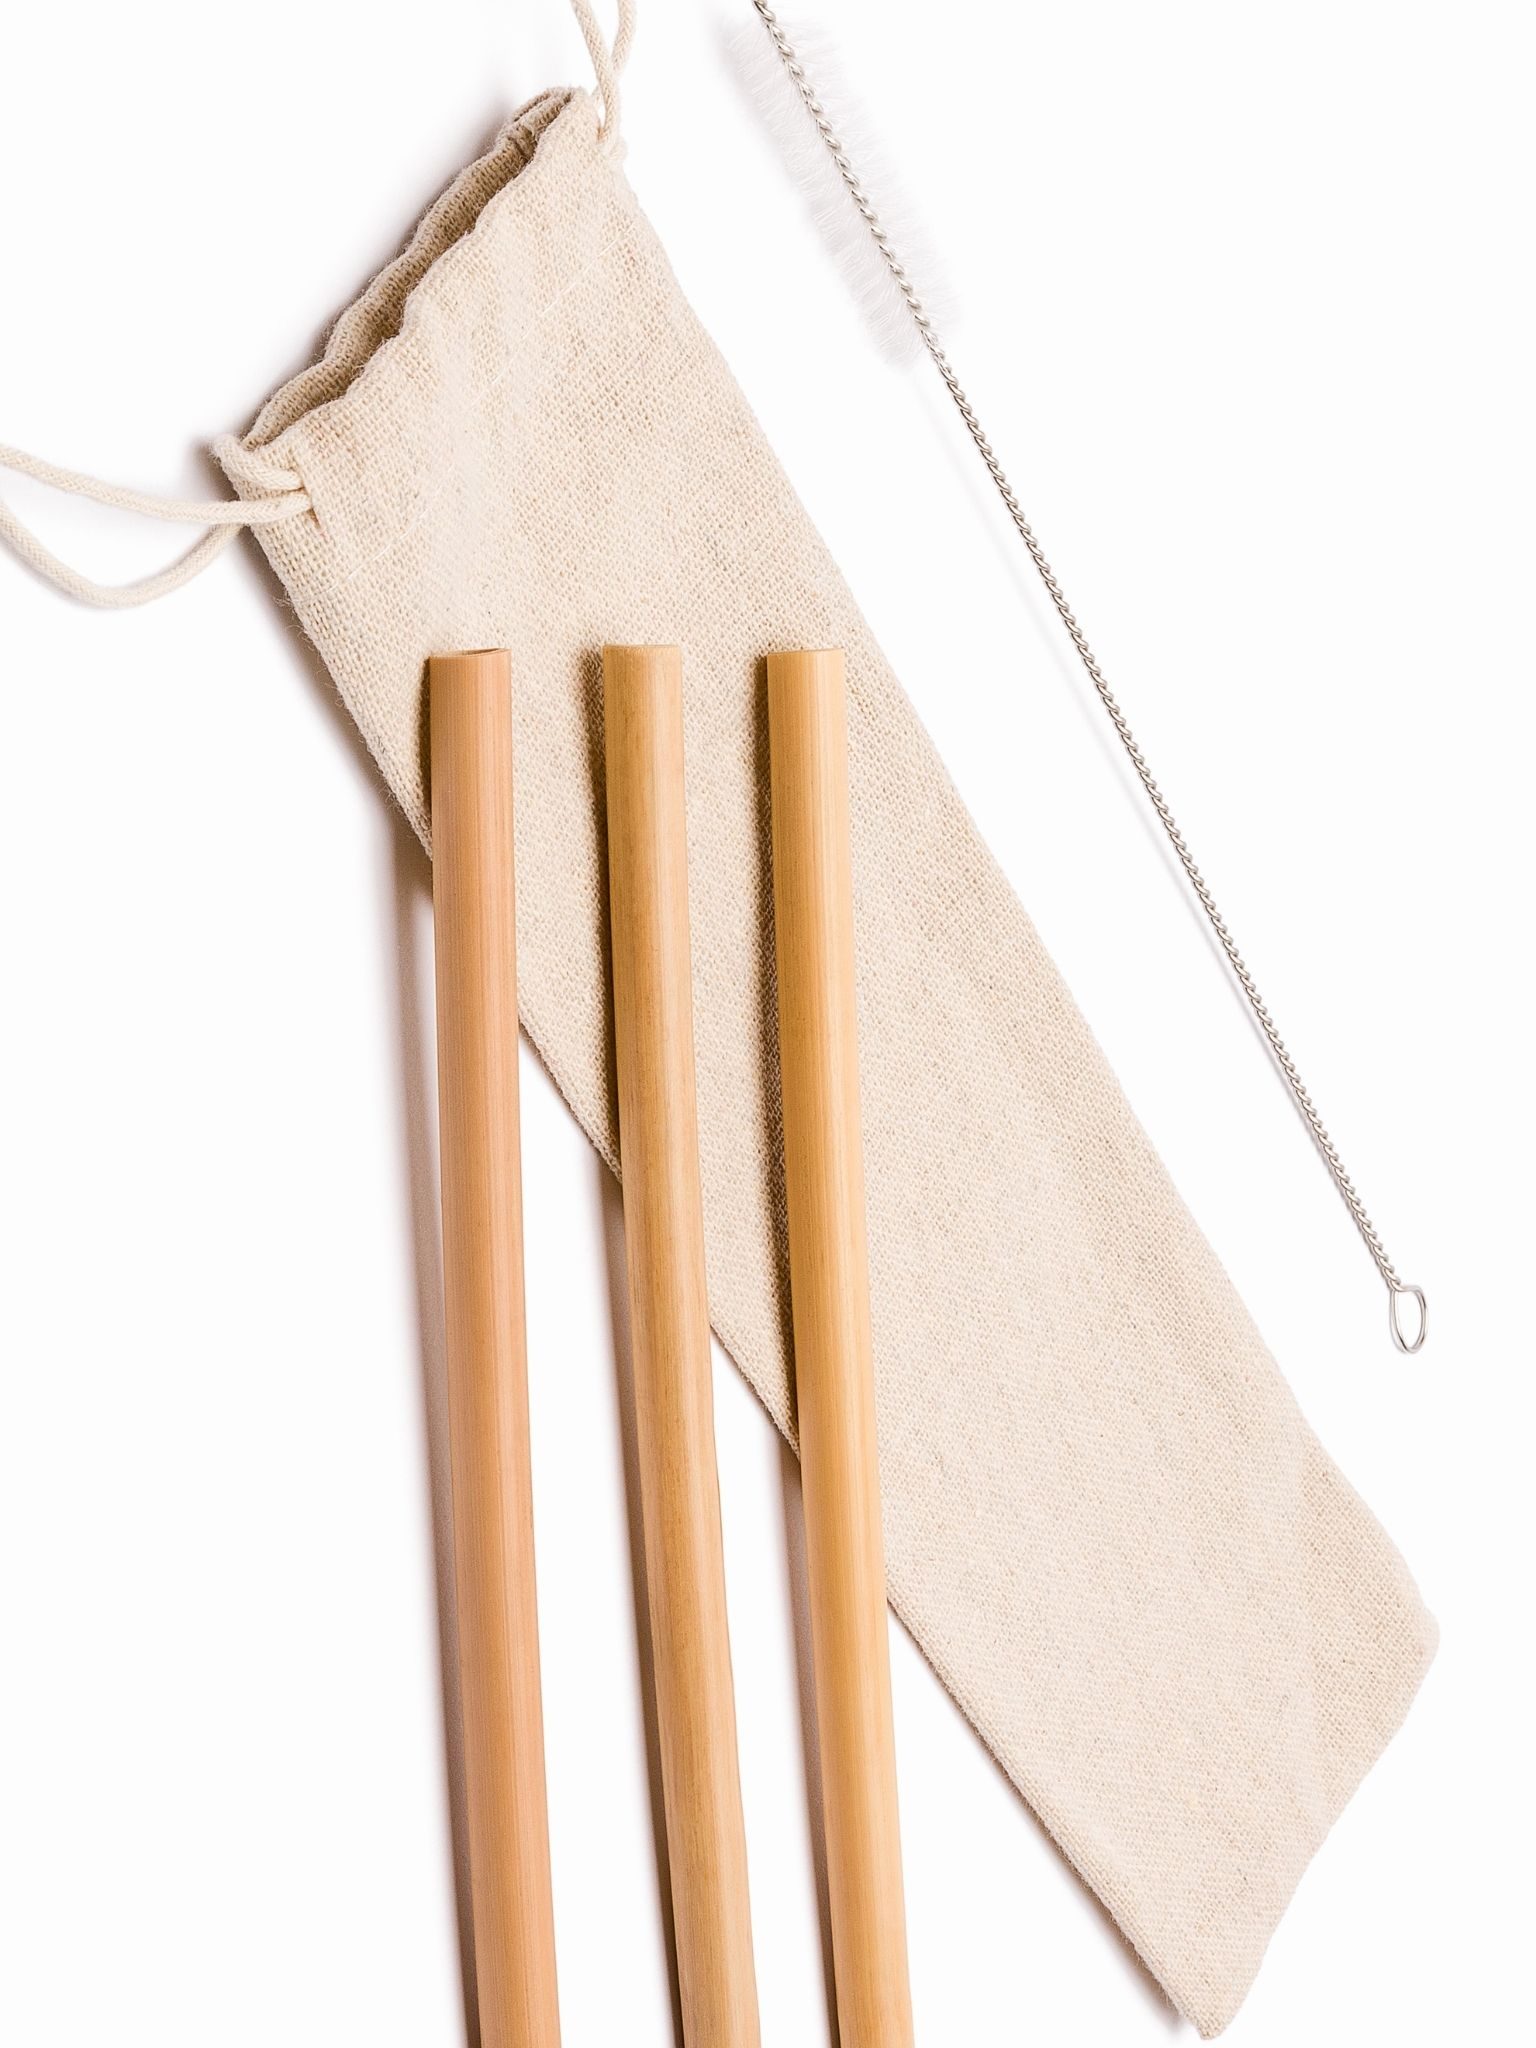 kit-reed-straw-reusable